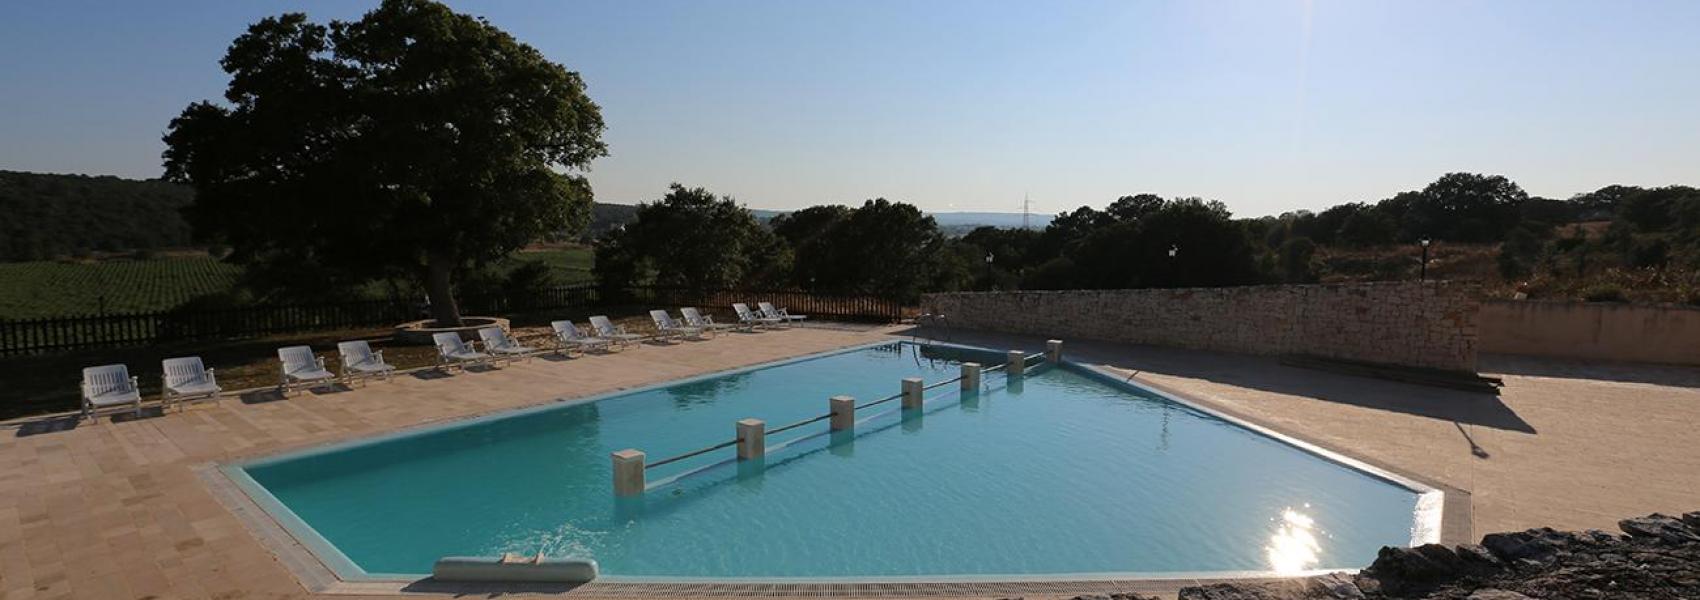 Trulli con piscina da Trulli Panoramici in Puglia